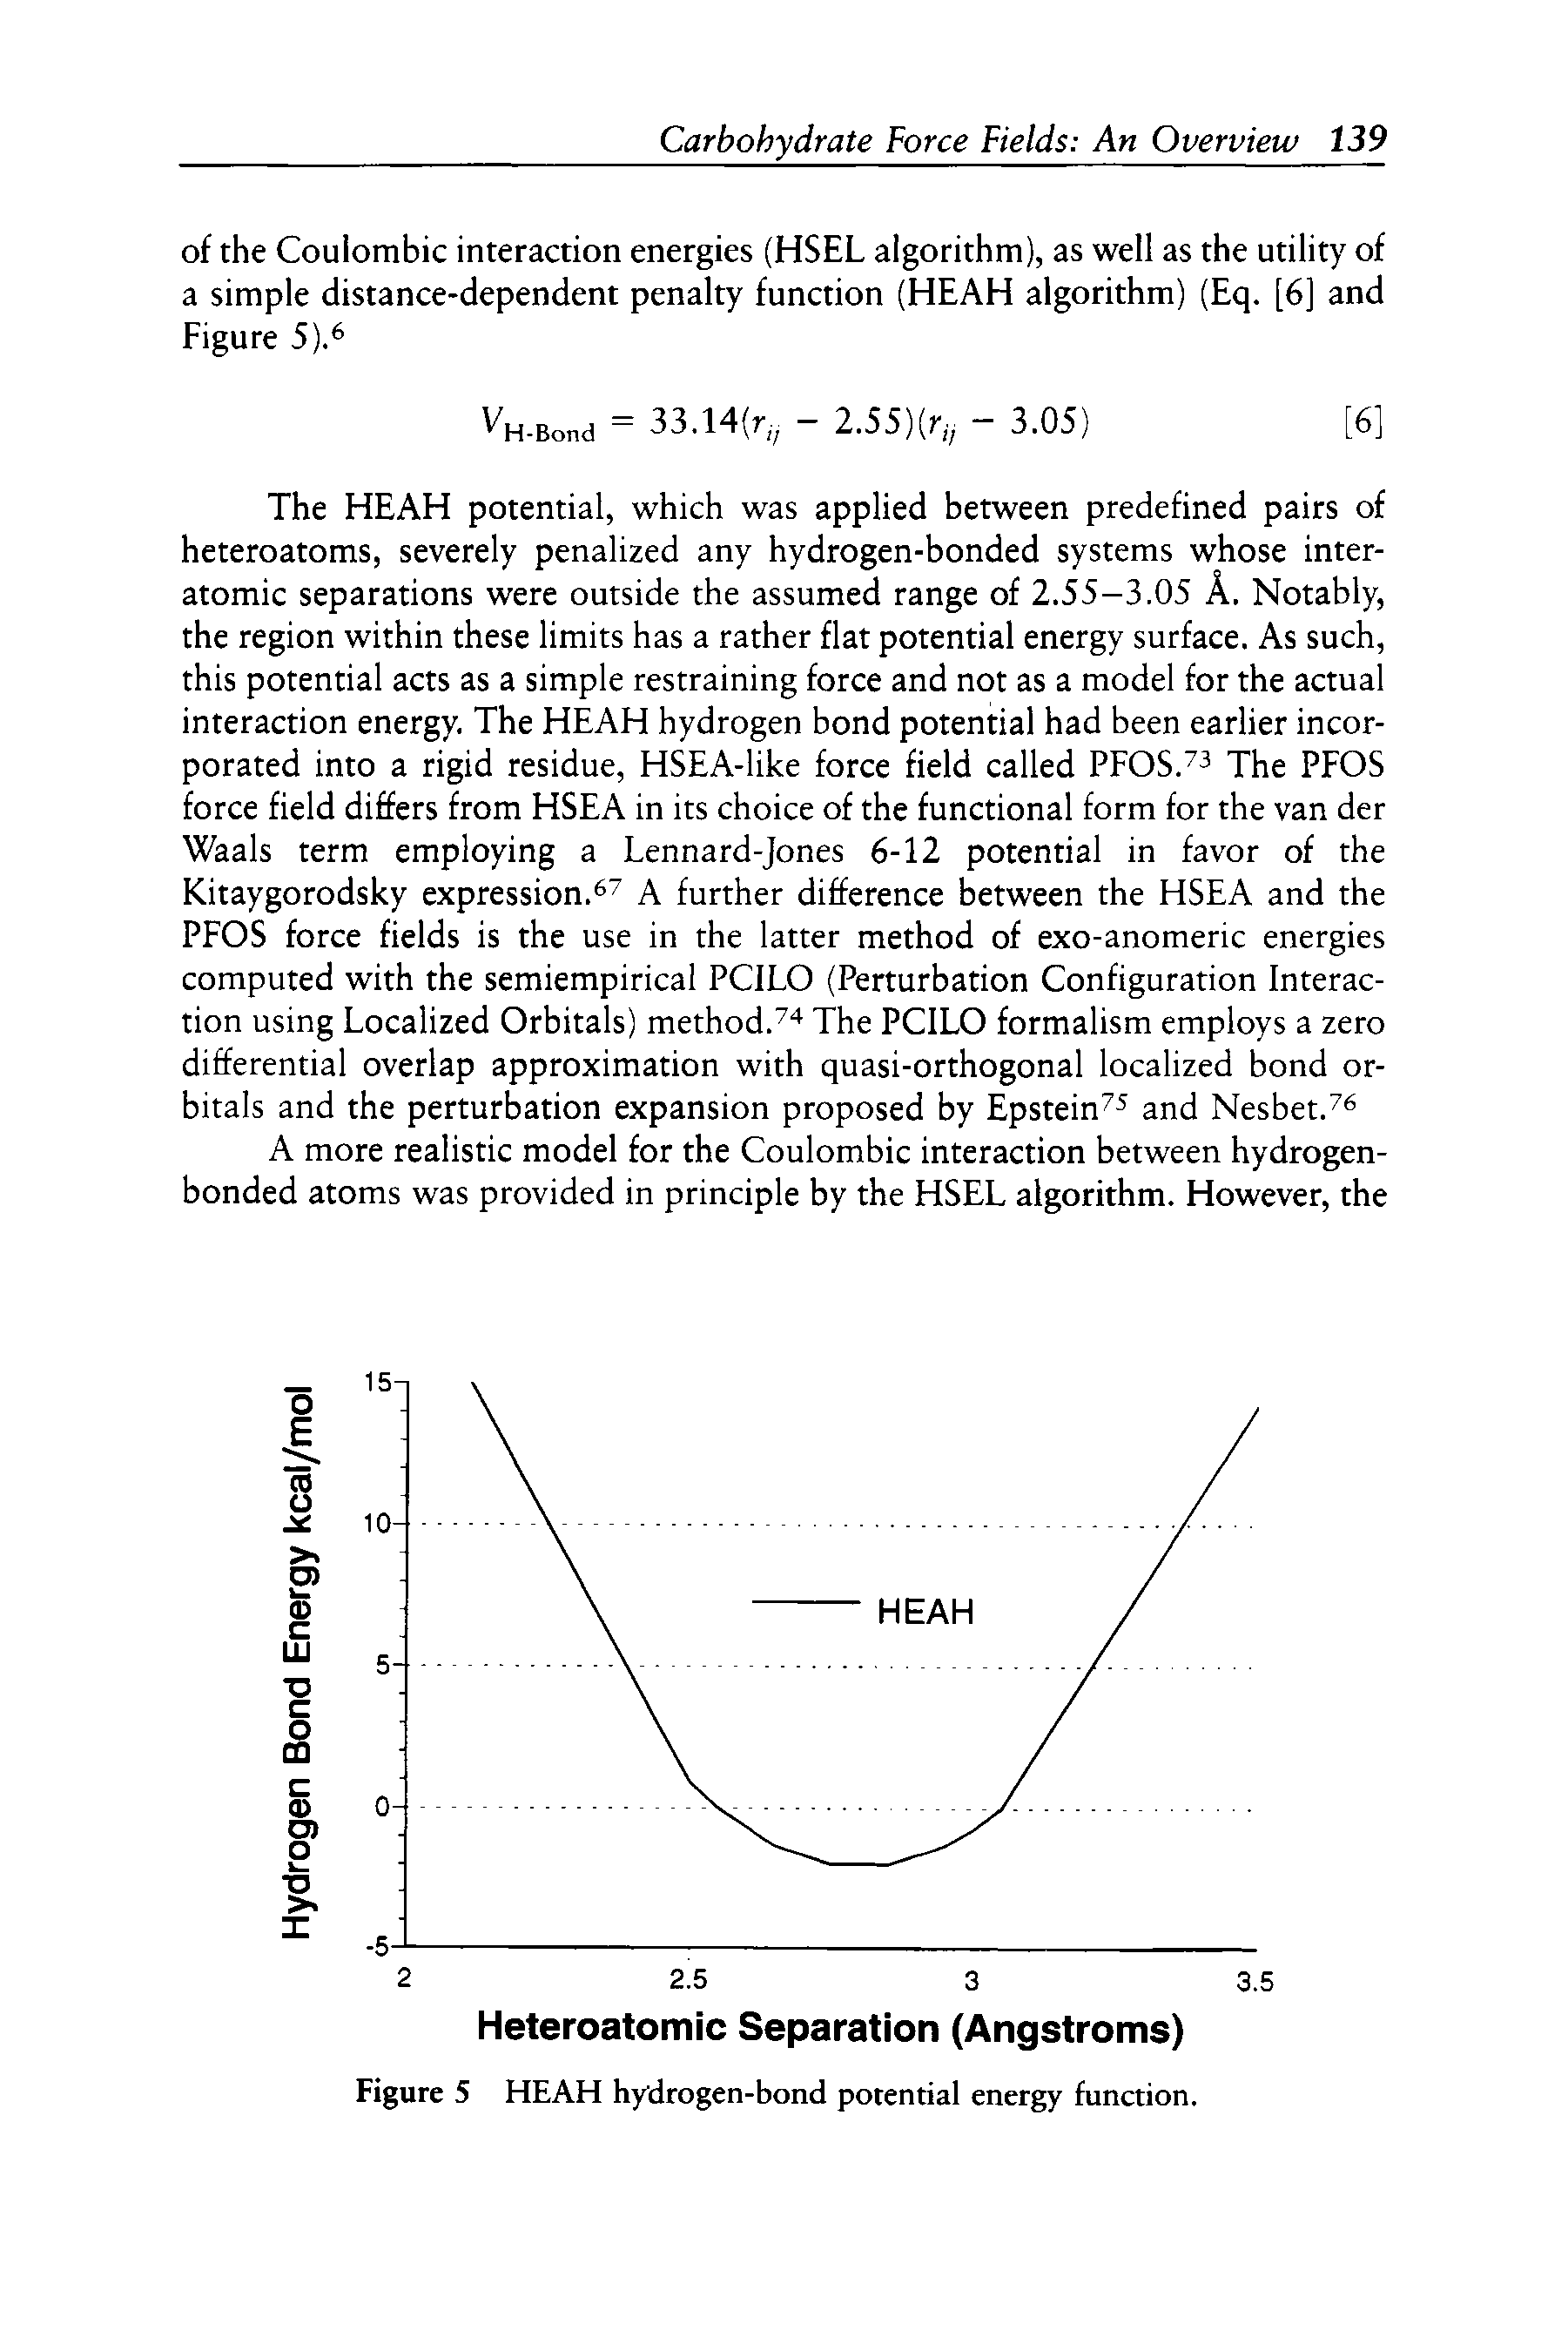 Figure 5 HEAH hydrogen-bond potential energy function.